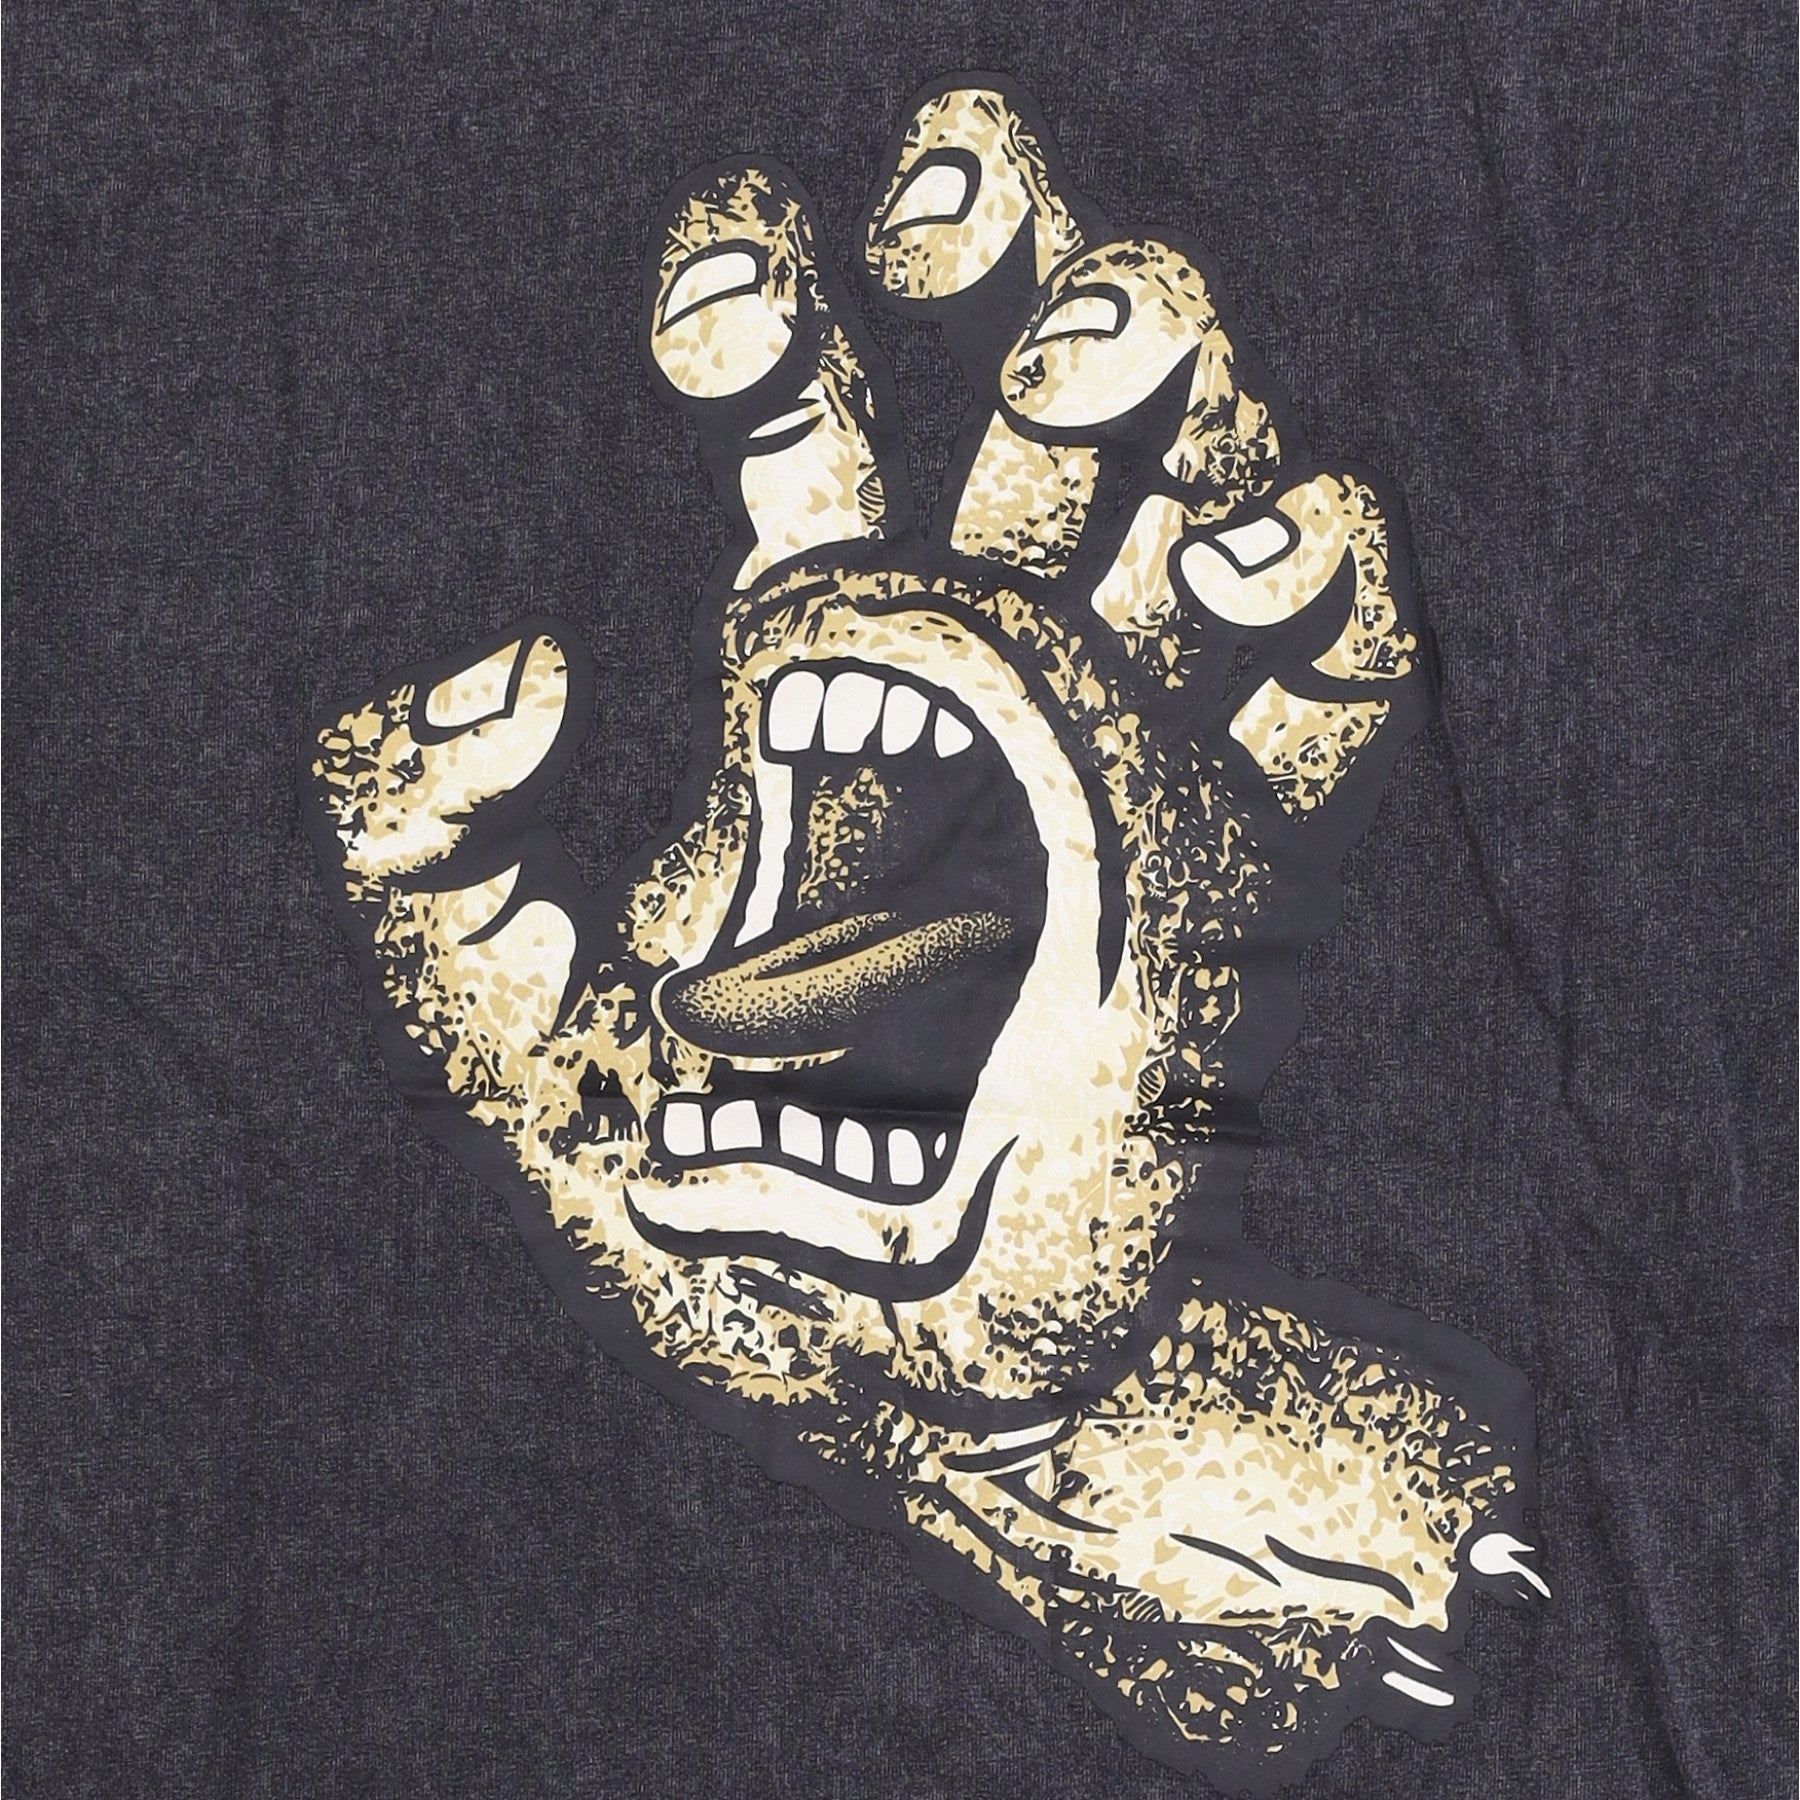 Men's Street Creep Hand Tee Black Acid Wash T-Shirt